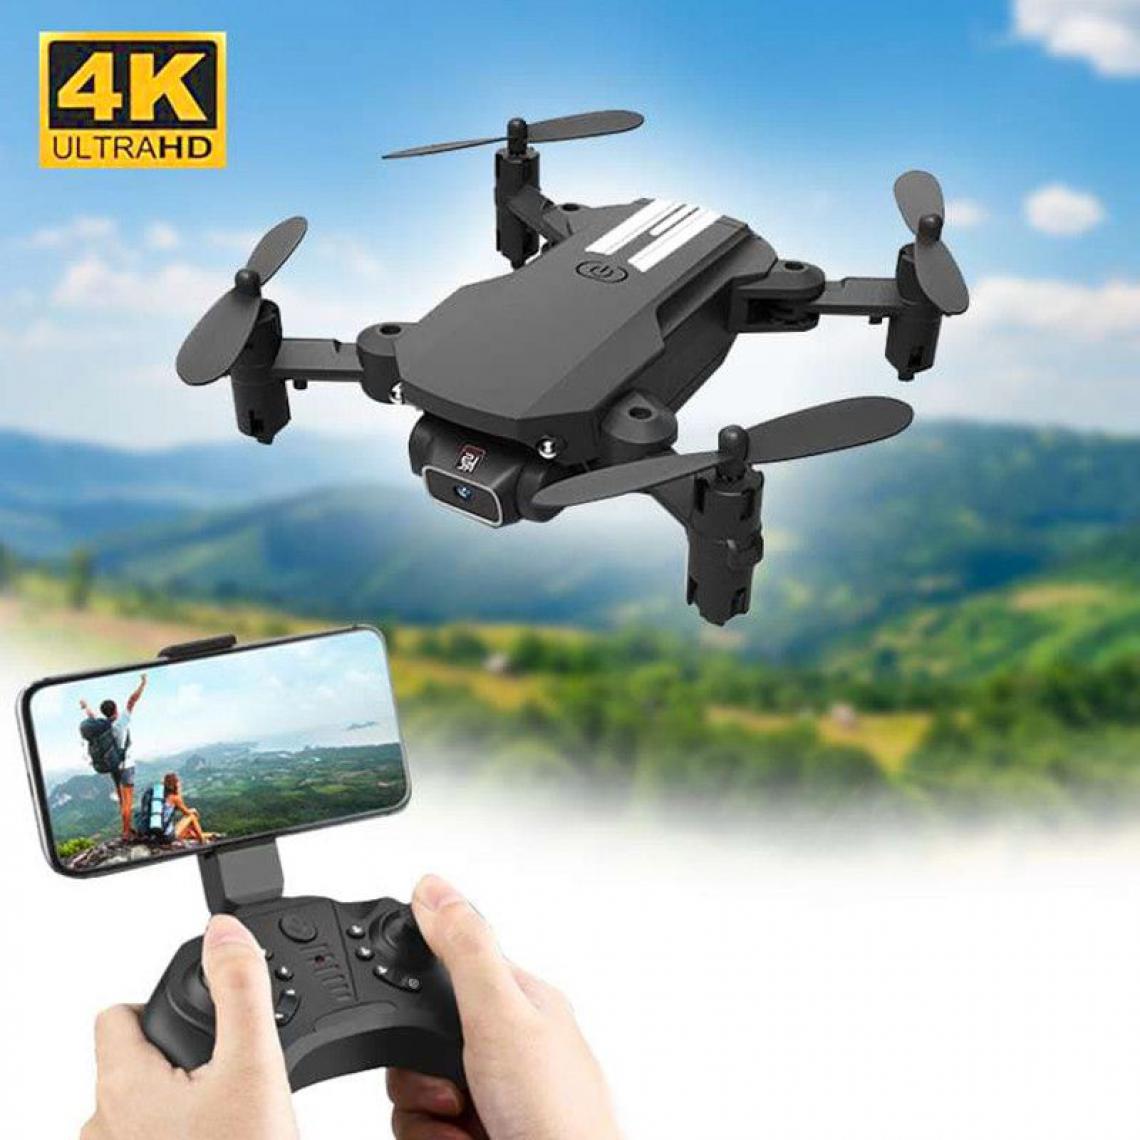 Inconnu - MINI DRONE 4K : Aéronef Miniature avec Camera Grand Angle et Commande WiFi via Smartphone - Drone connecté